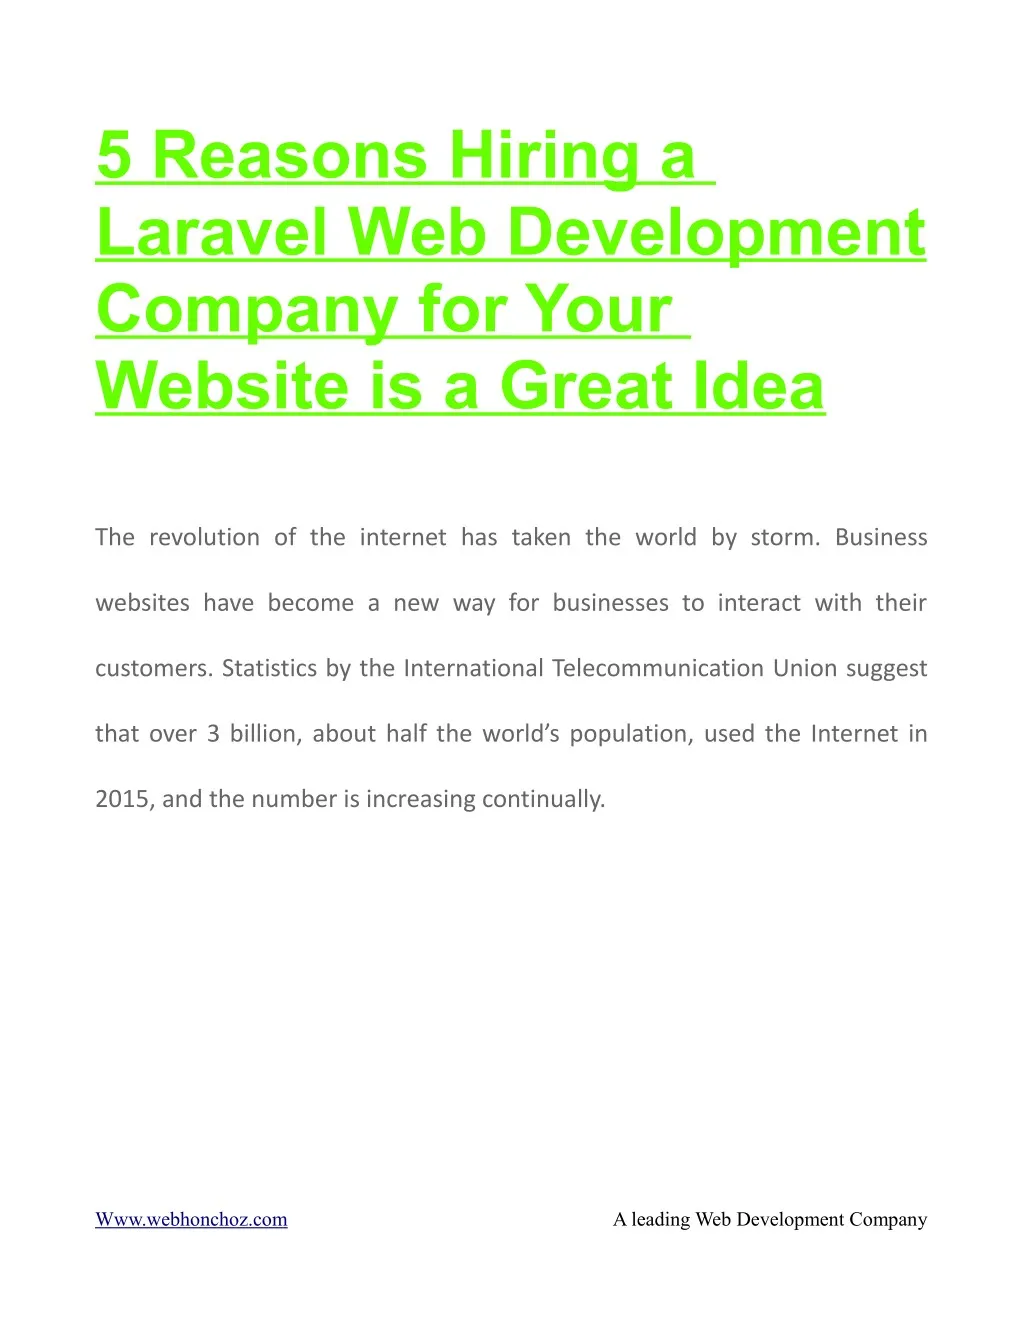 5 reasons hiring a laravel web development